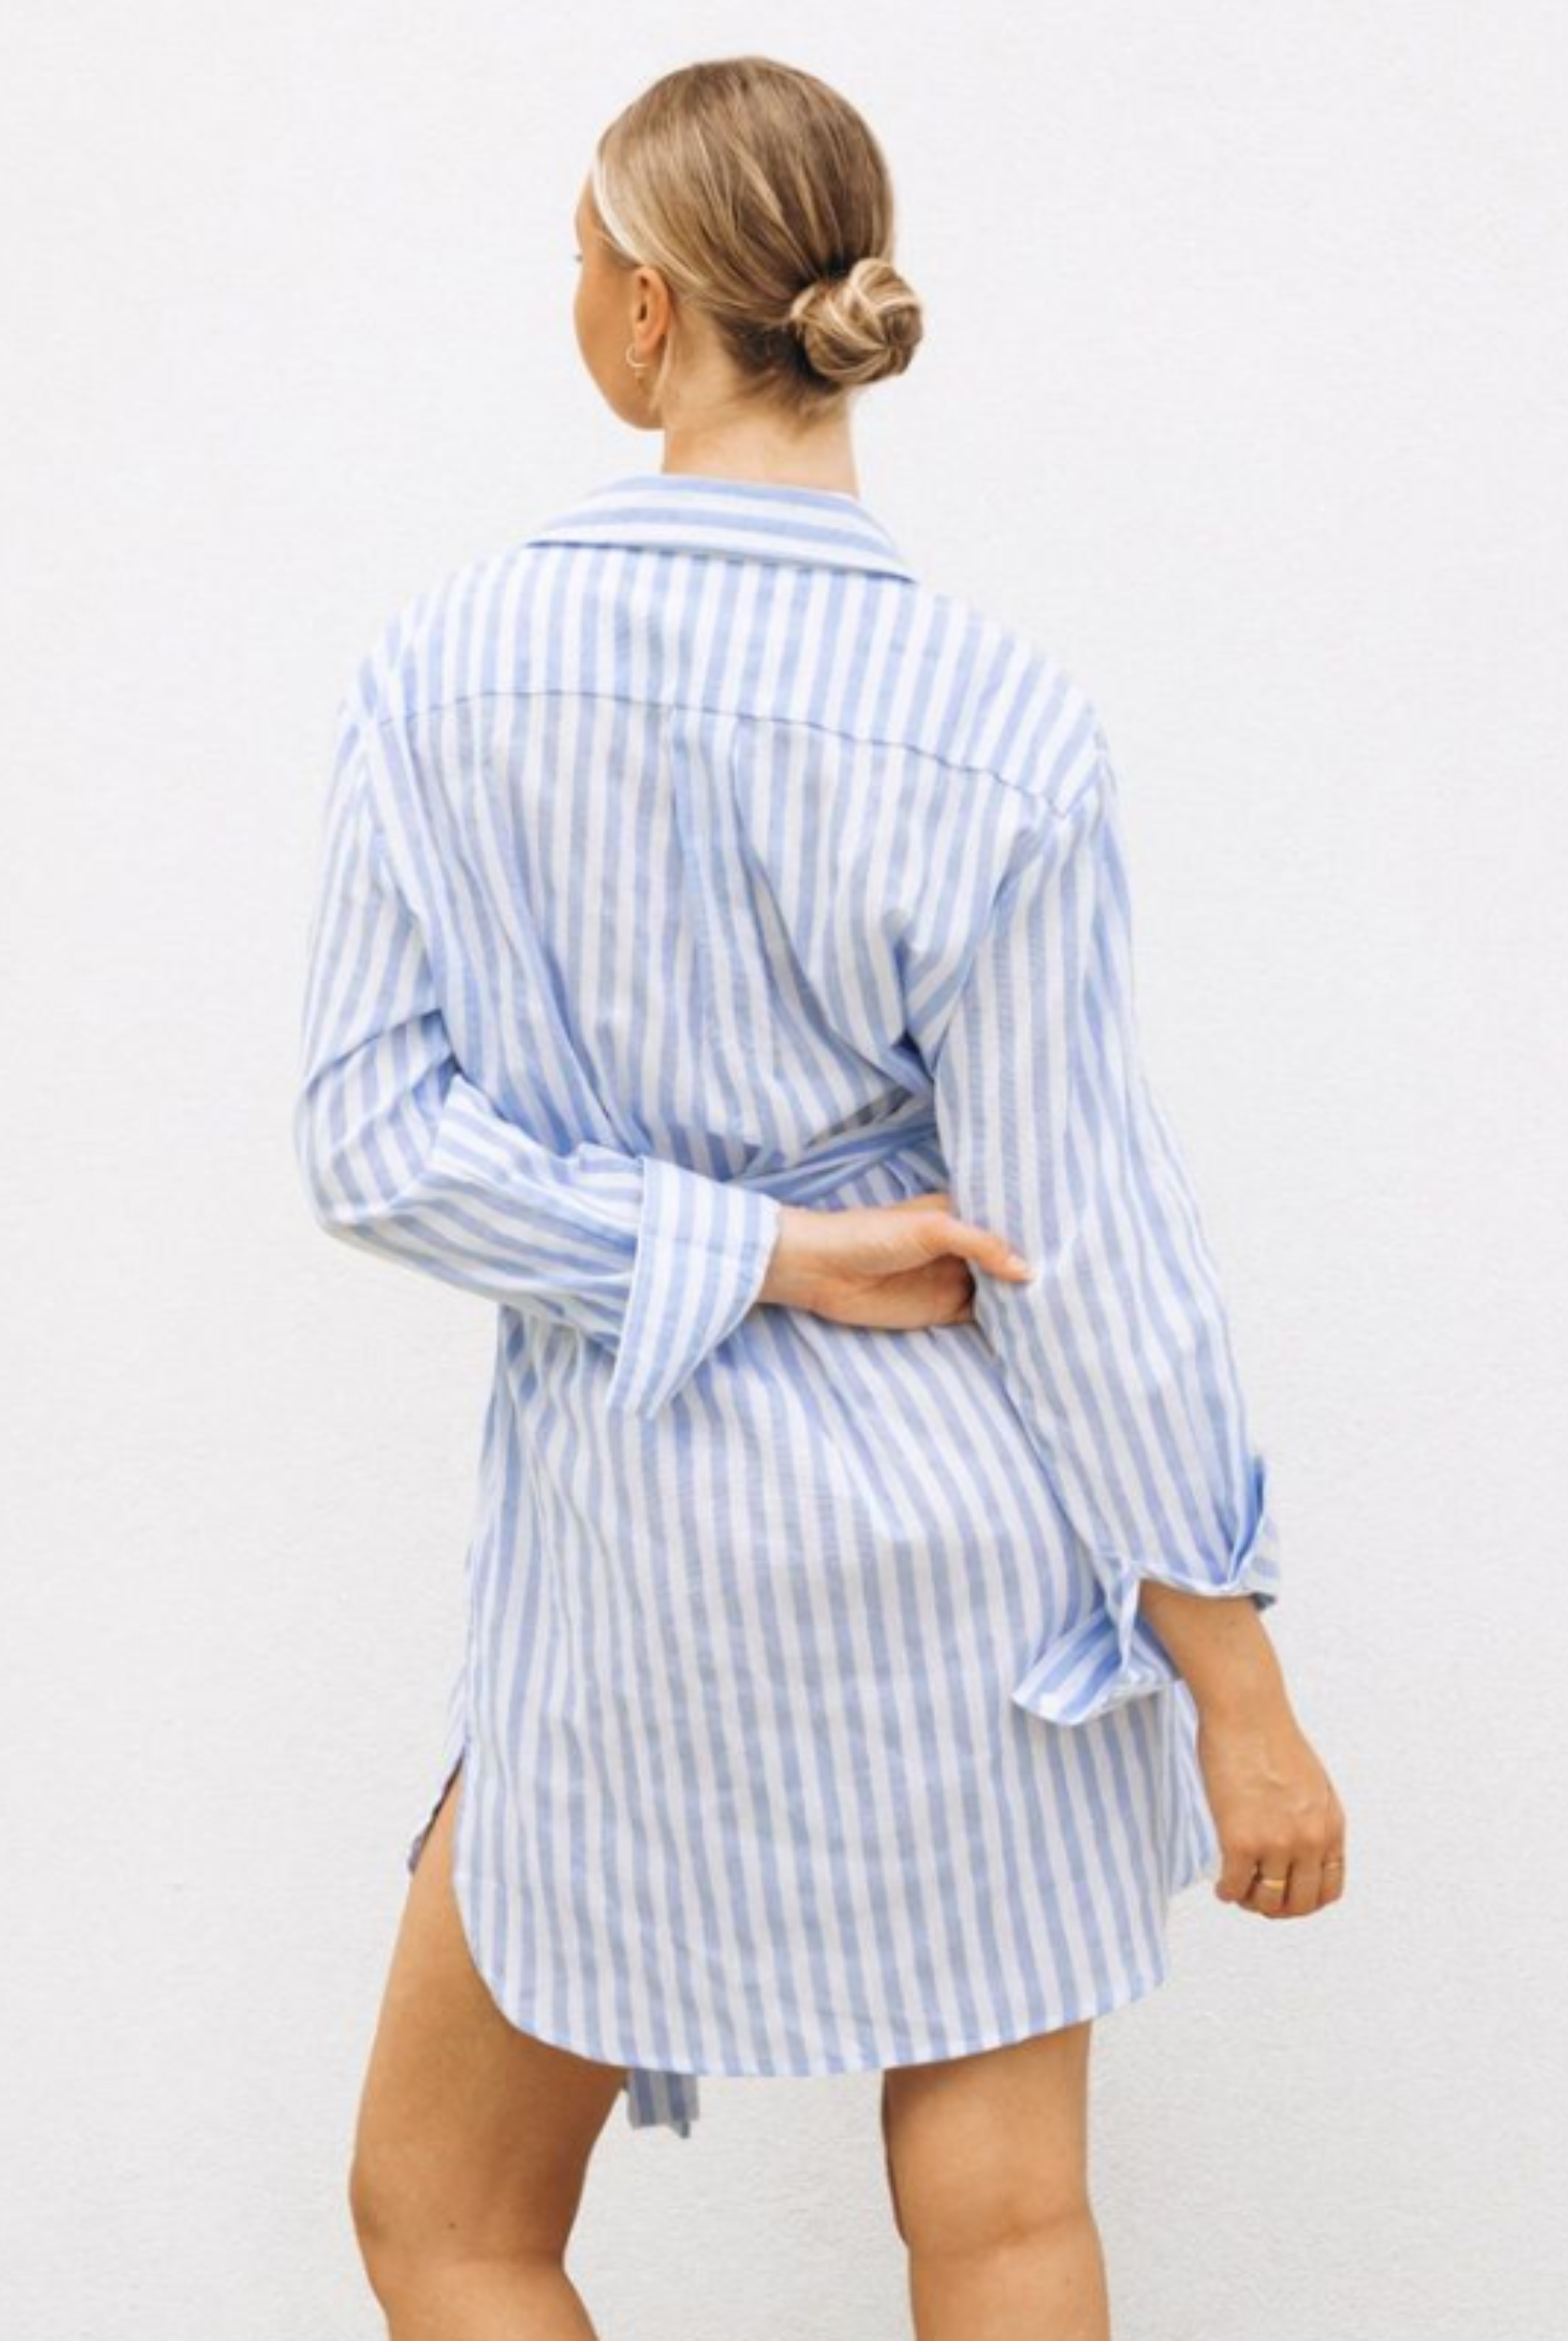 Model wearing the sia stripe shirt dress from paper heart 